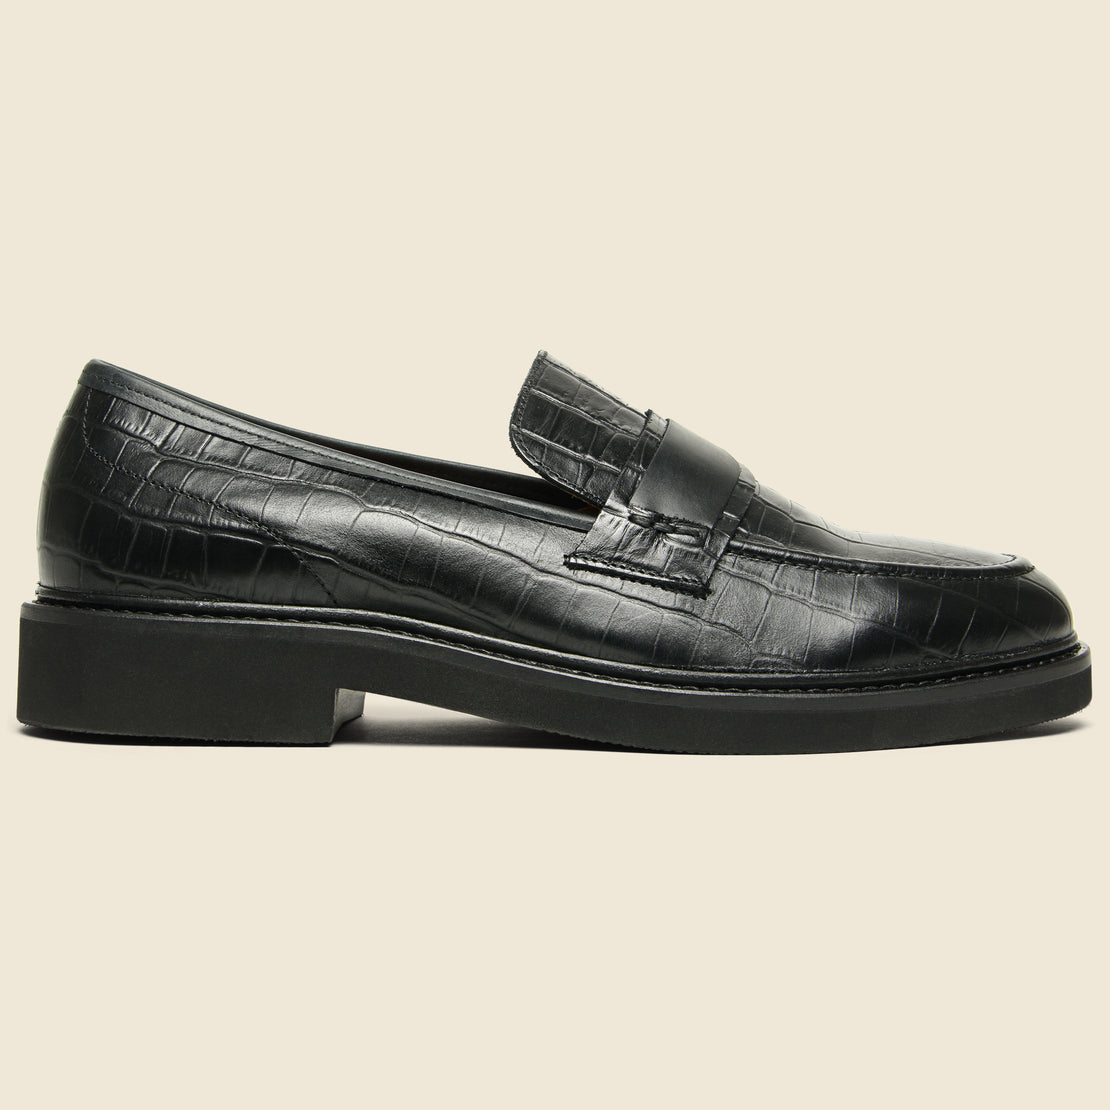 Shoe the Bear Farley Croc Loafer - Black